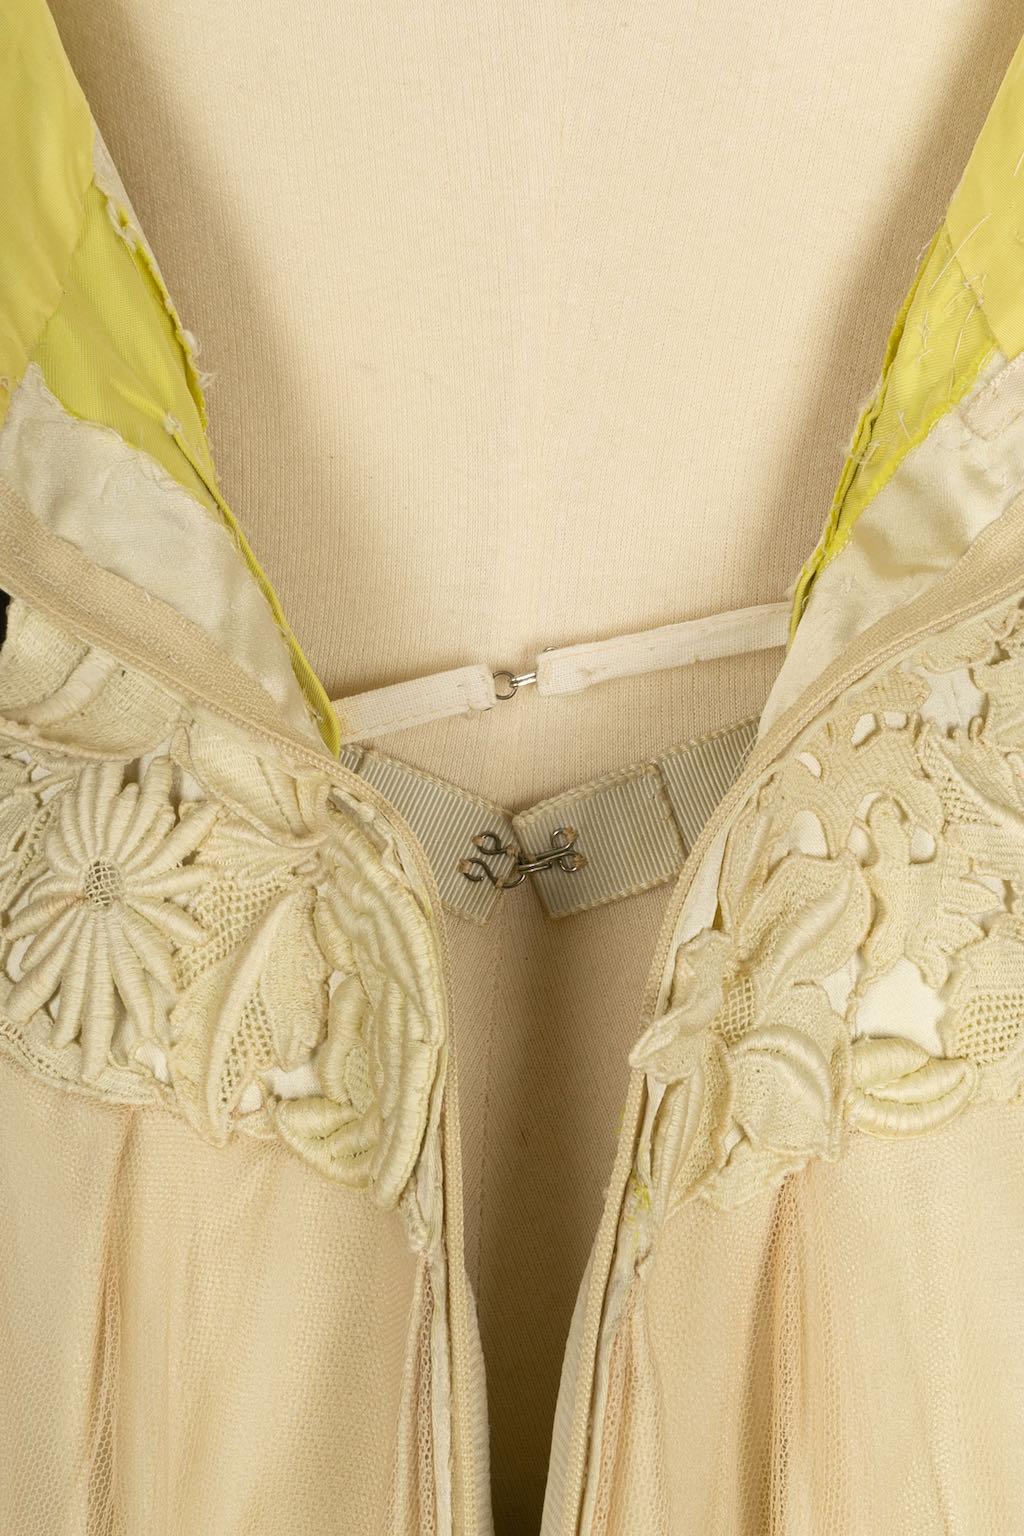 Jean Patou Haute Couture Kleid Frühjahr-Sommer 1955 im Angebot 3